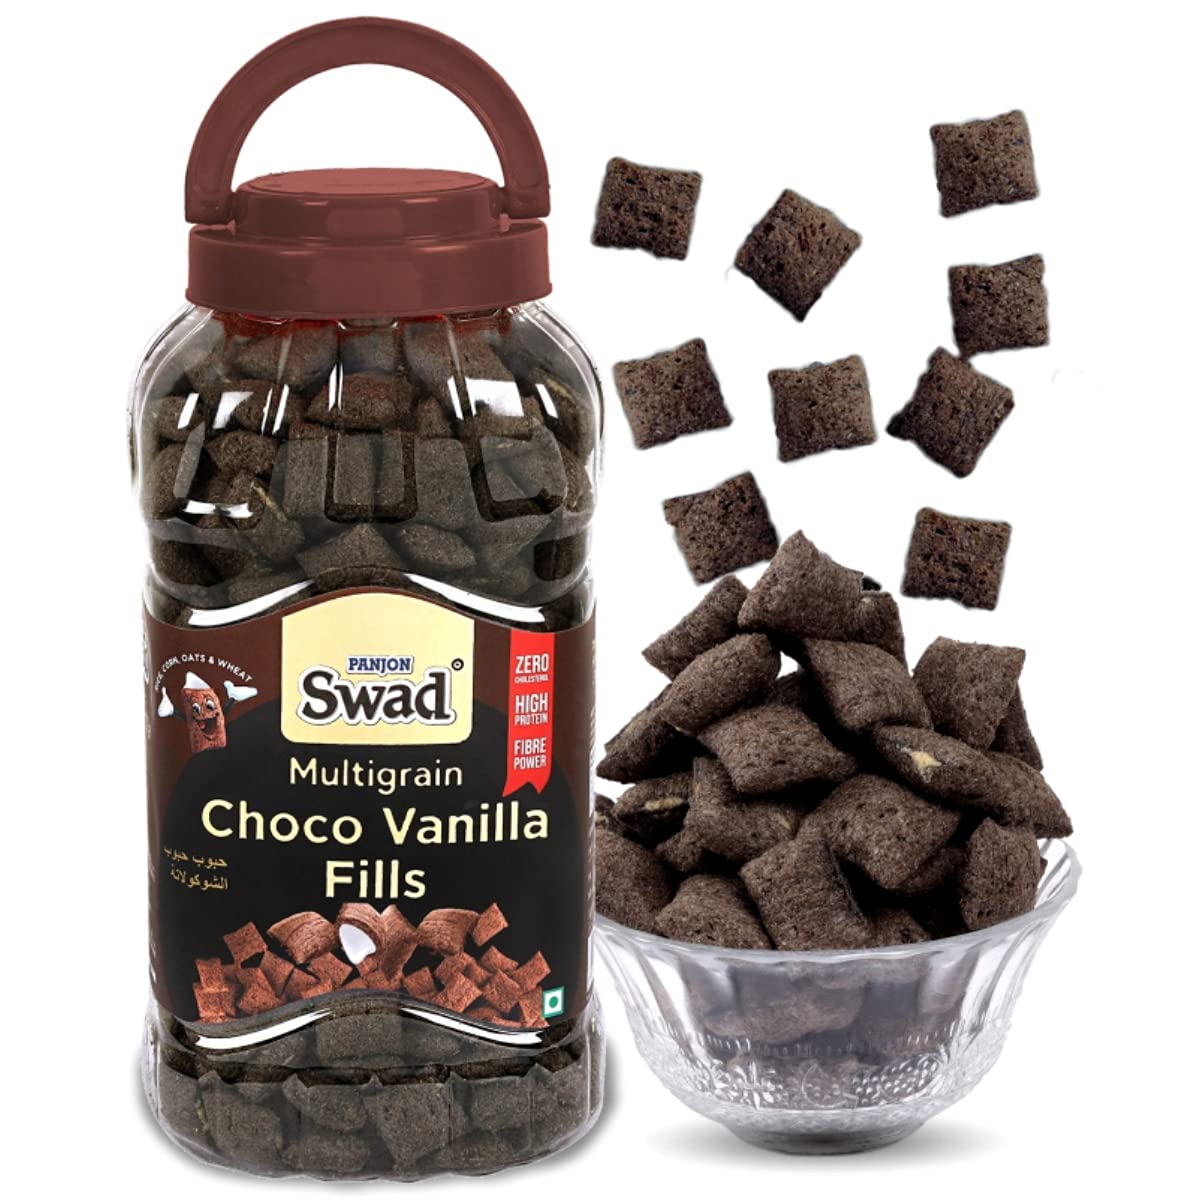 Swad Multigrain Choco Vanilla Flakes Image